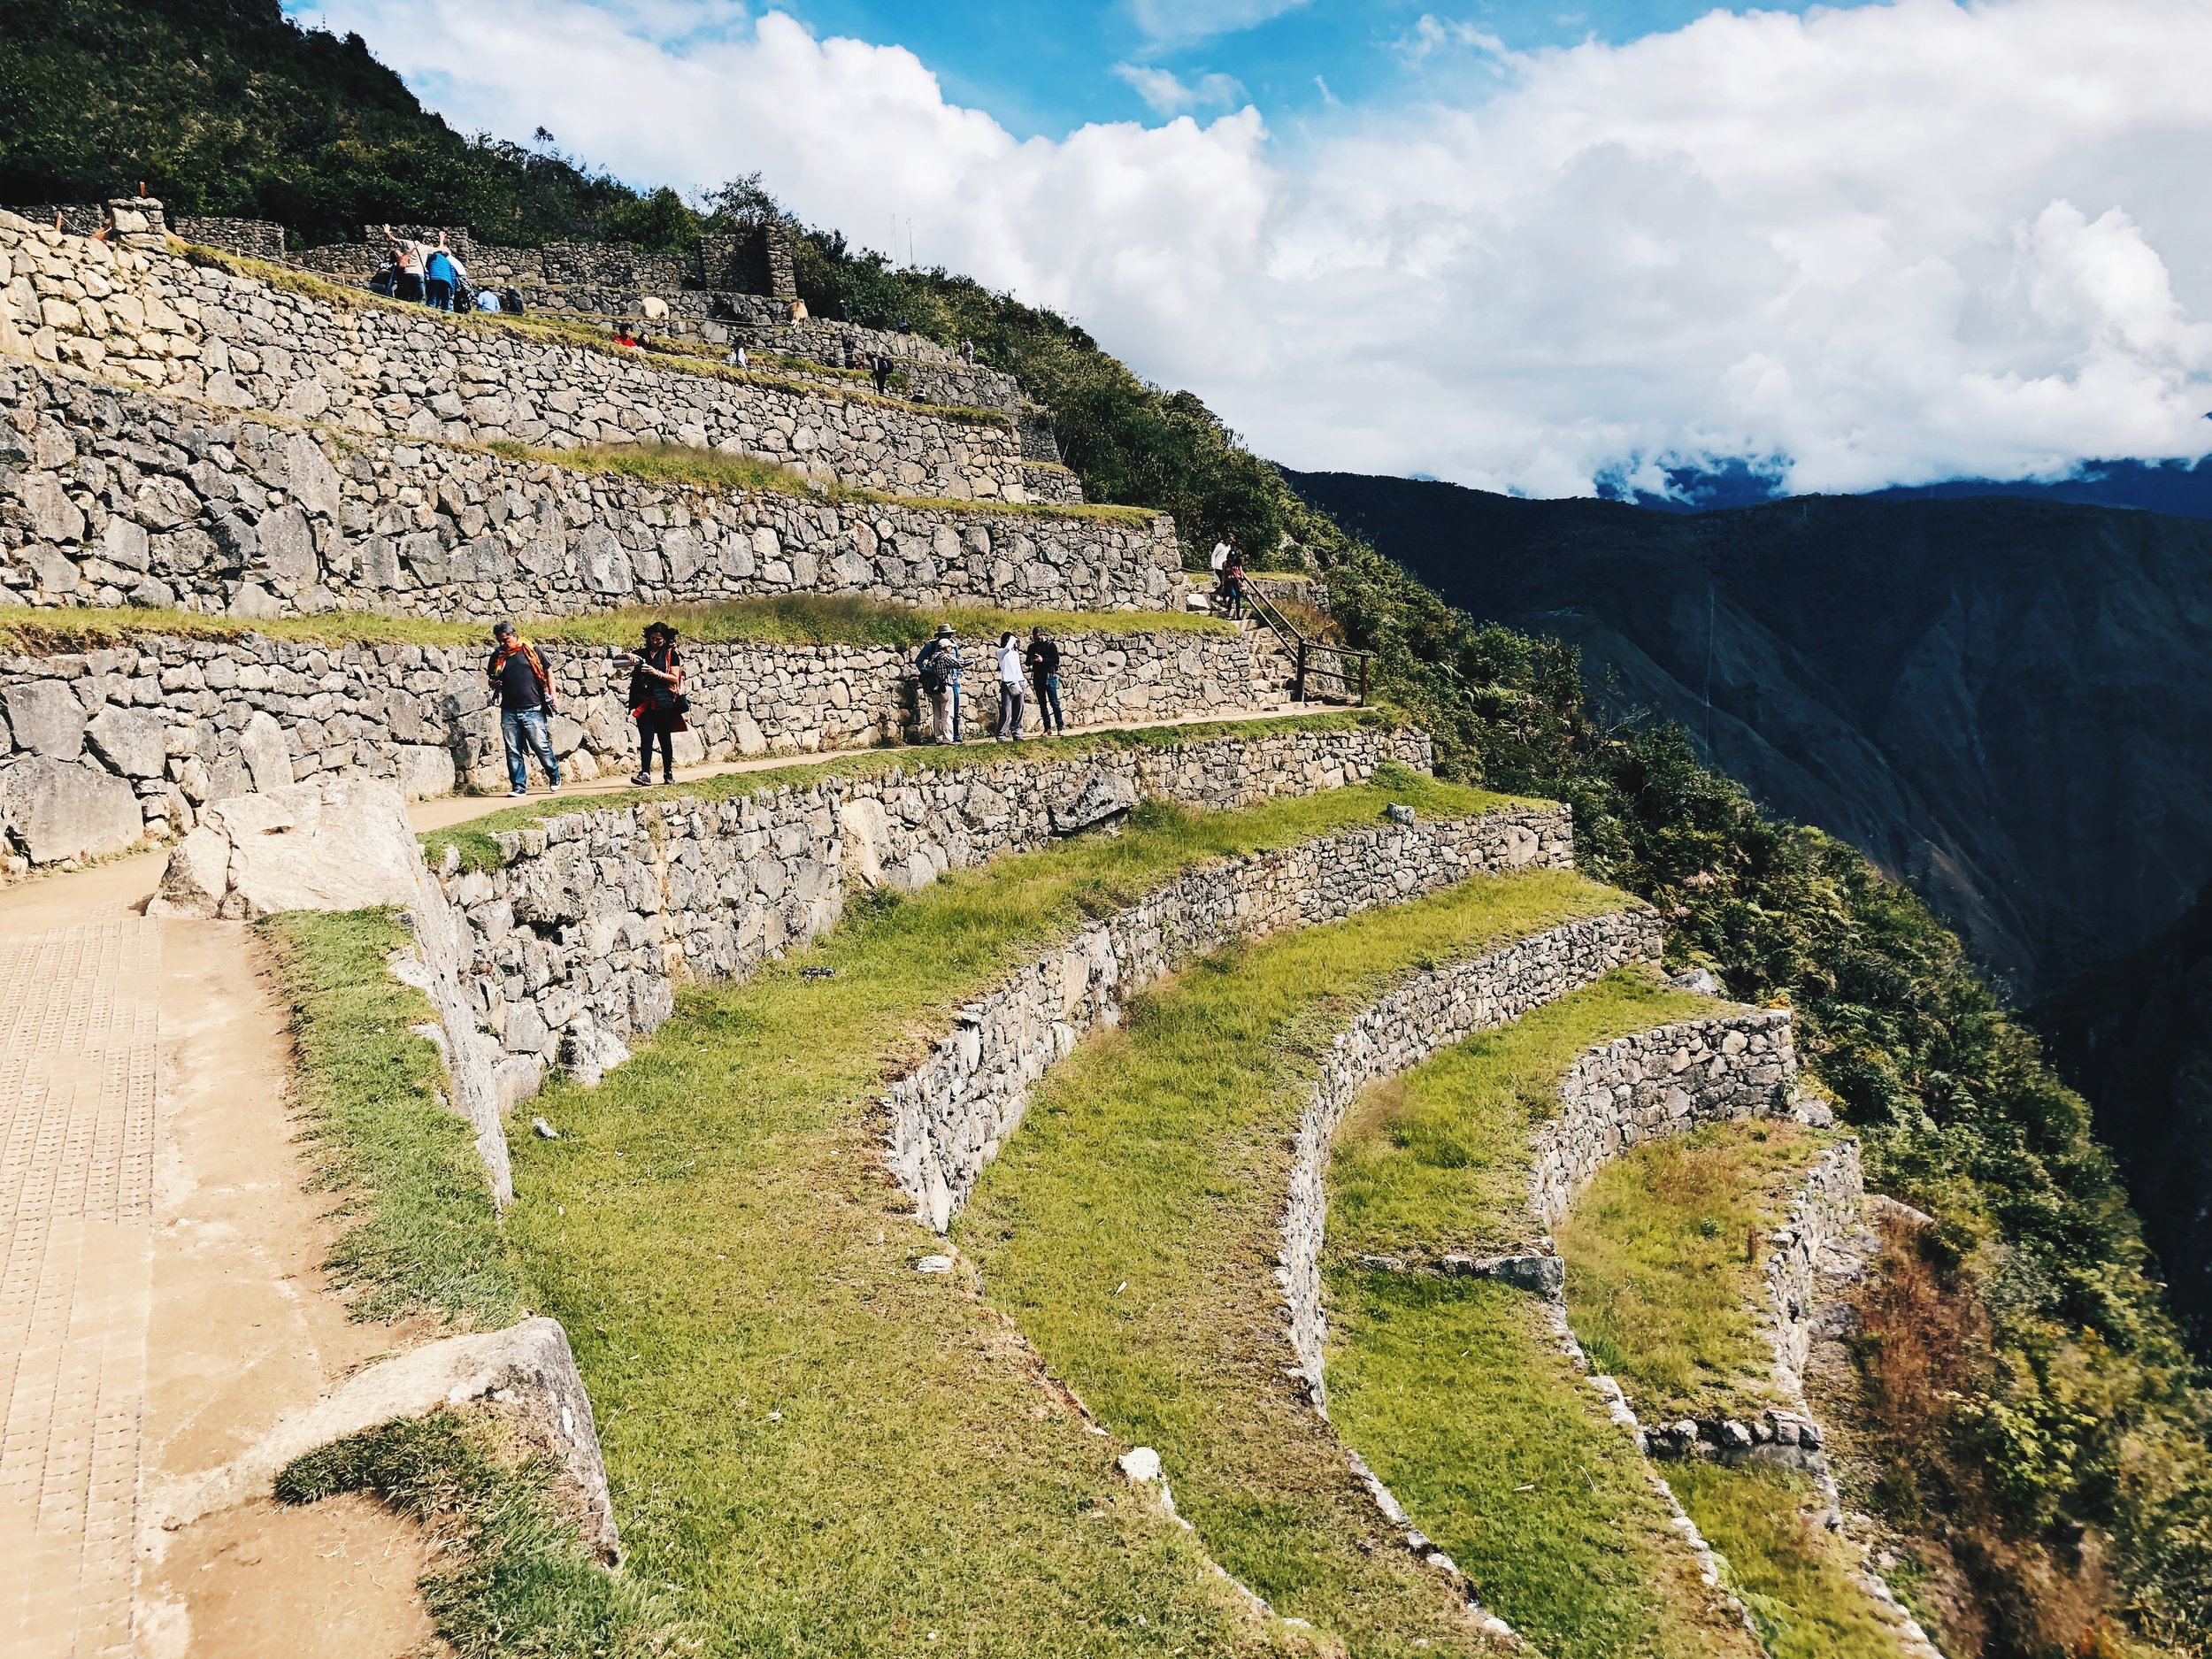  Guide to Visiting Machu Picchu